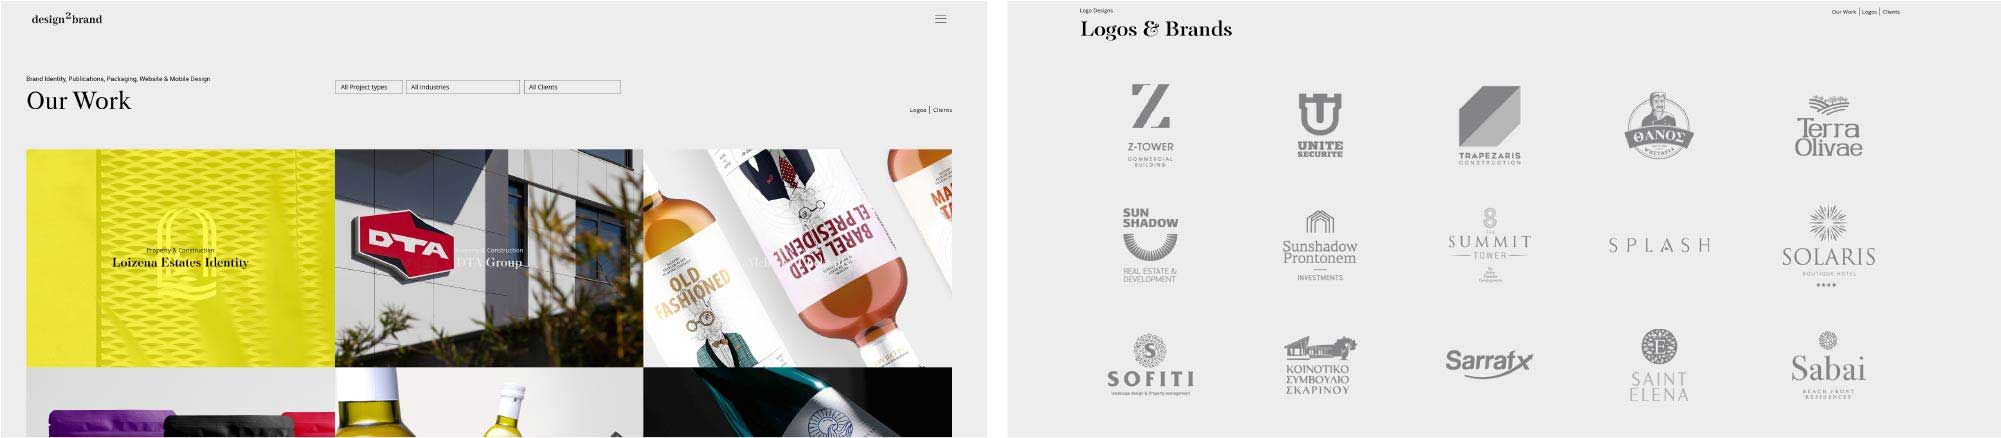 design2brand,applab,seo,website design